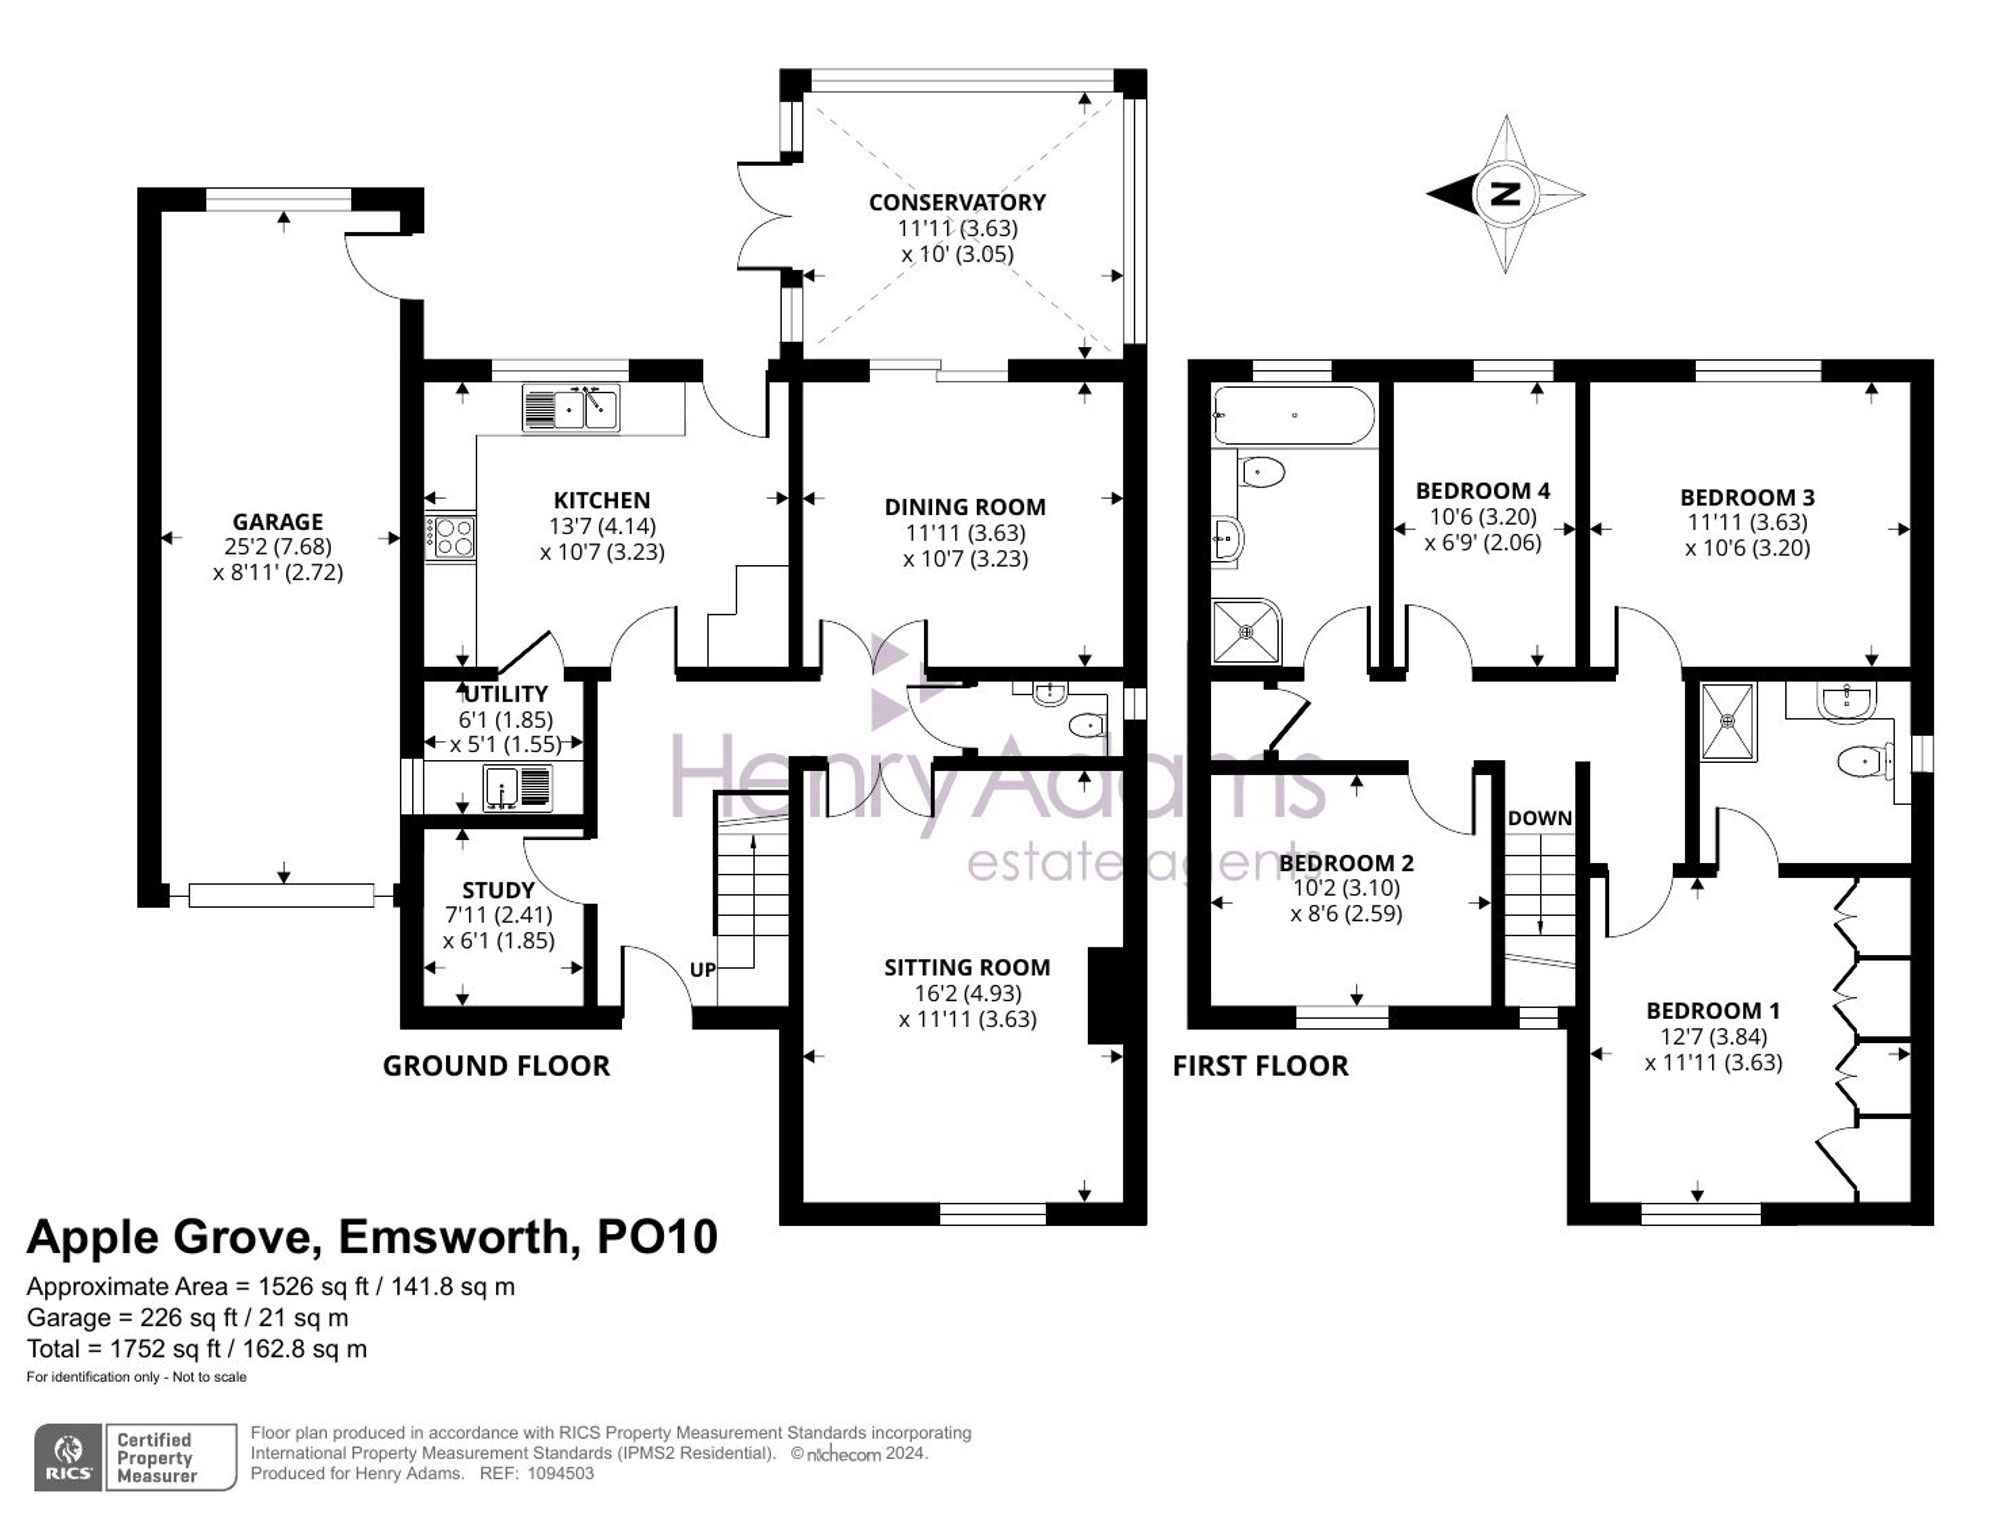 Apple Grove, Emsworth, PO10 floorplans